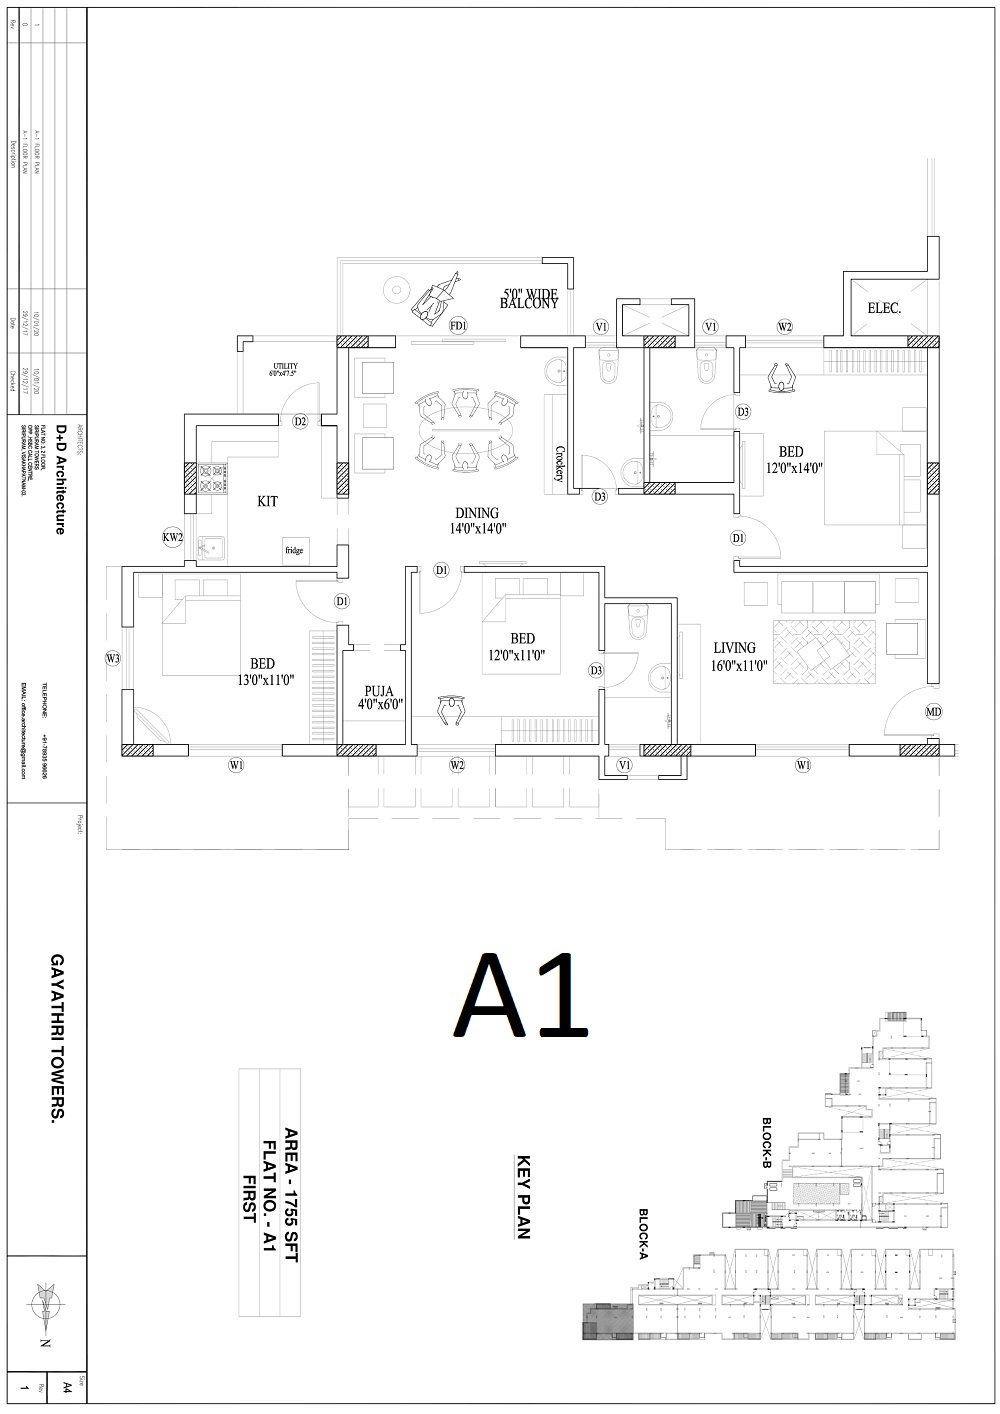 A1 - Floor Plan